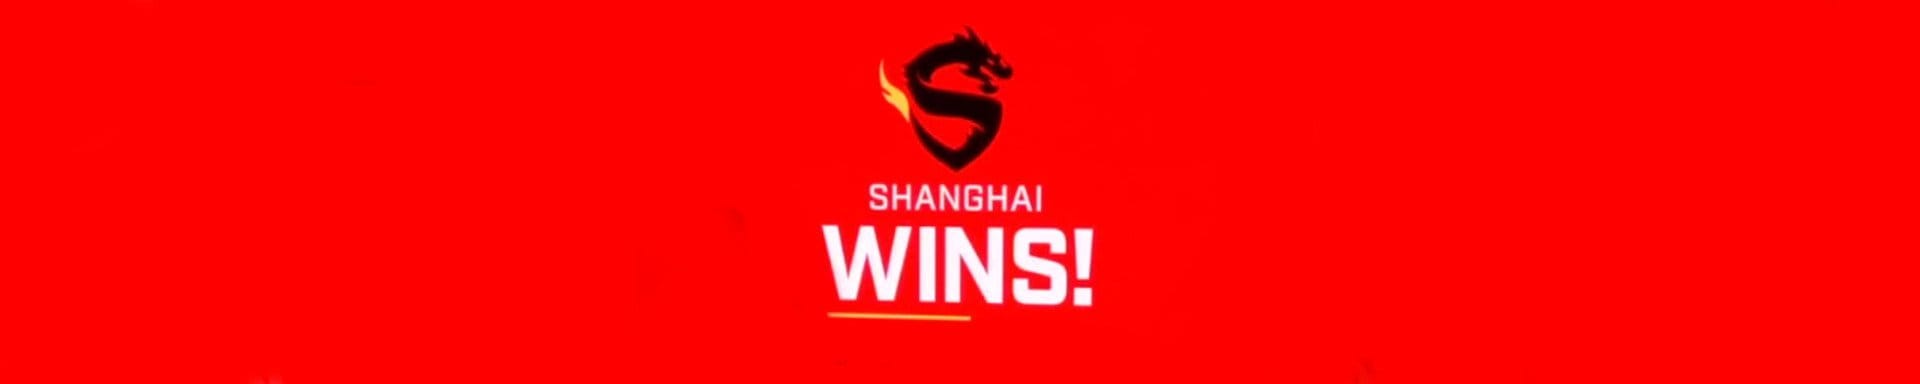 overwatch league shanghai dragons win slice